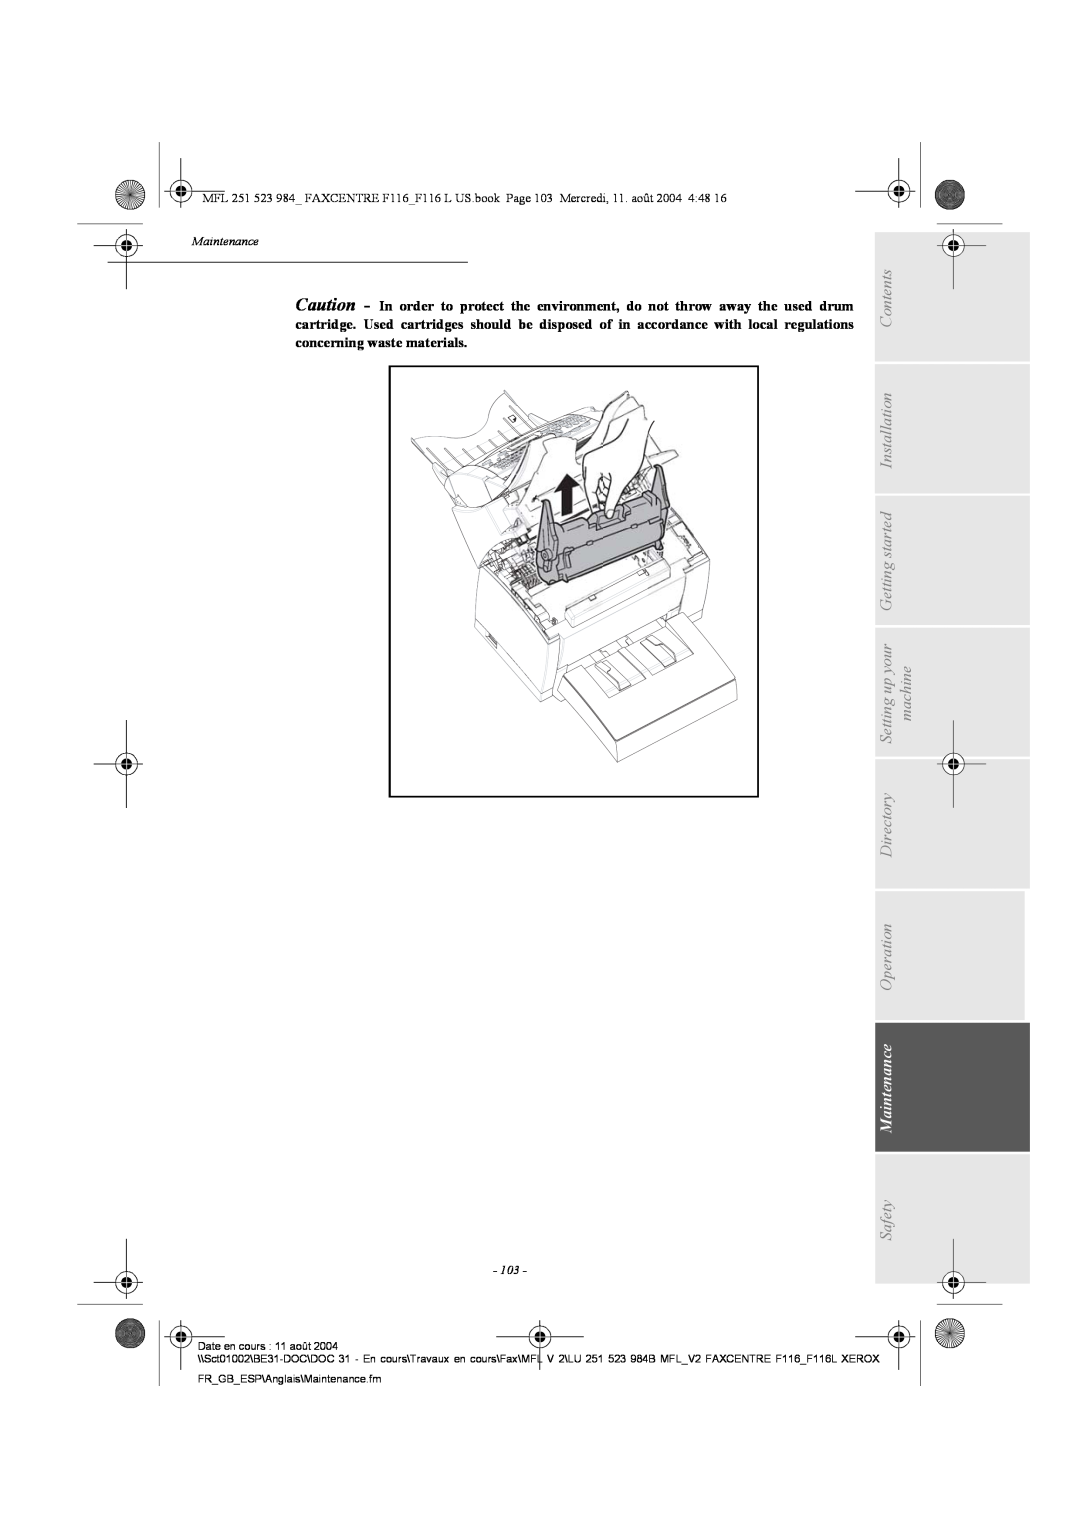 Xerox F116 user manual Safety Maintenance, Date en cours 11 août, FR_GB_ESP\Anglais\Maintenance.fm 